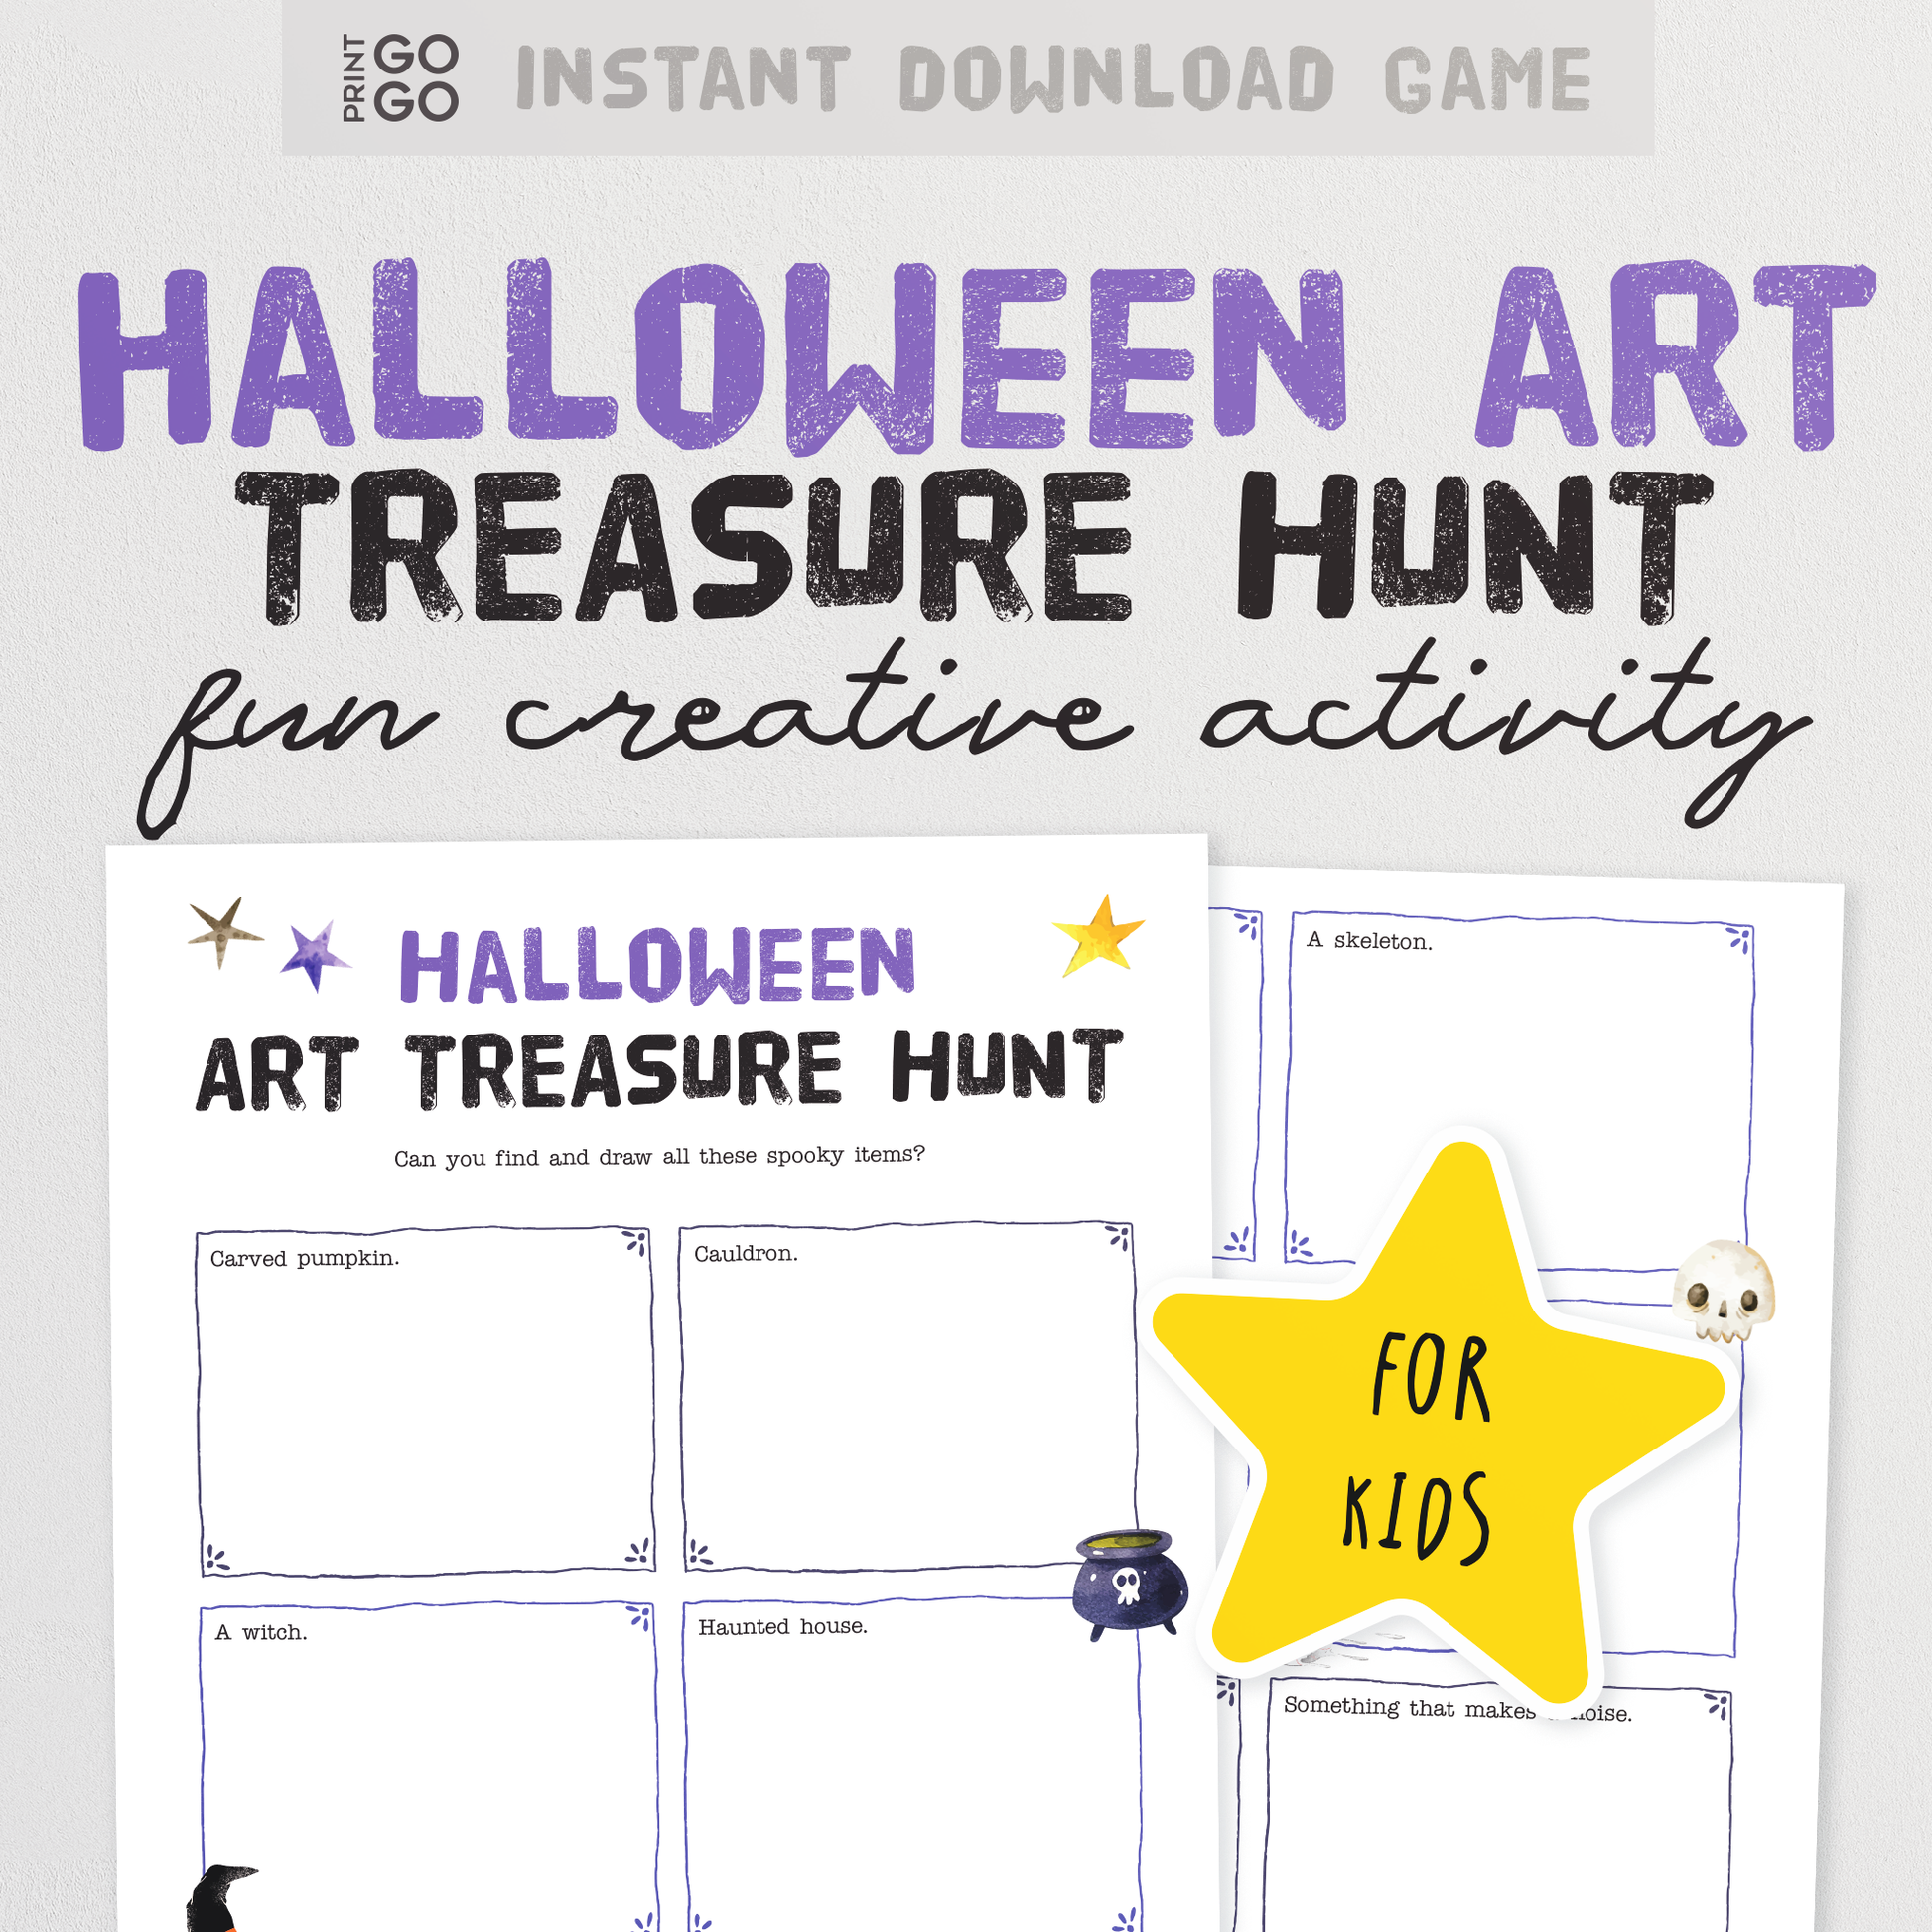 Halloween Art Treasure Hunt